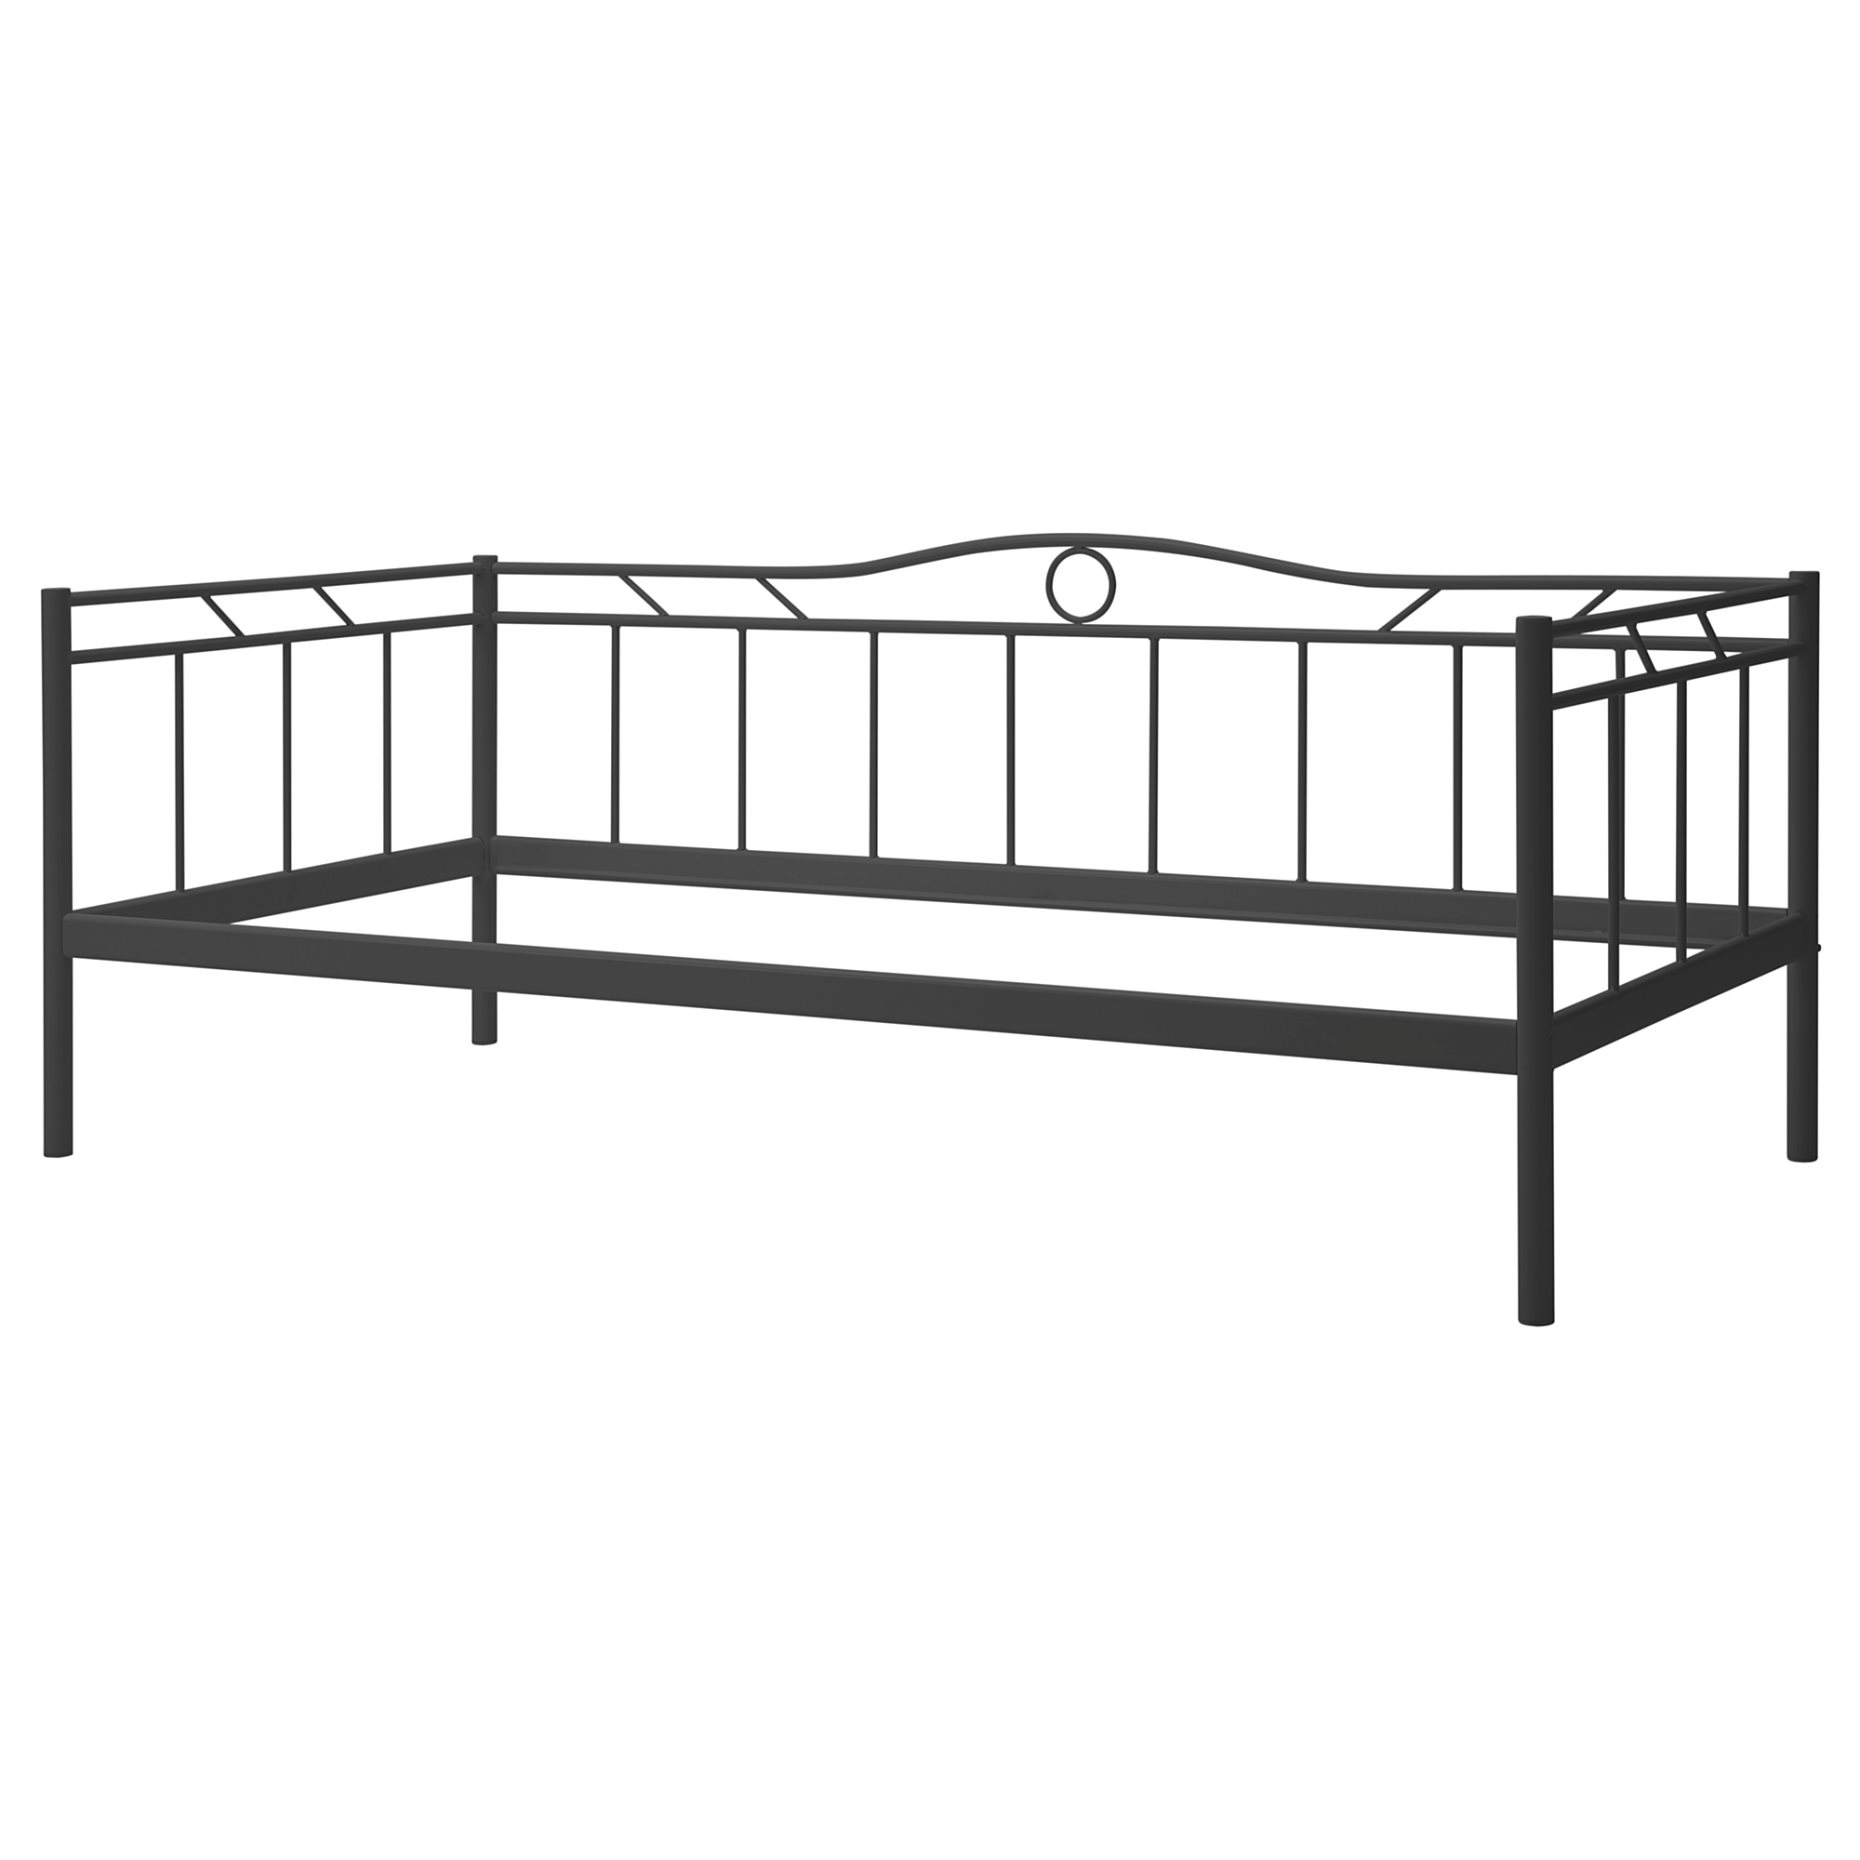 RAMSTA, κρεβάτι day-bed με τάβλες, 90X200 cm, 592.927.42